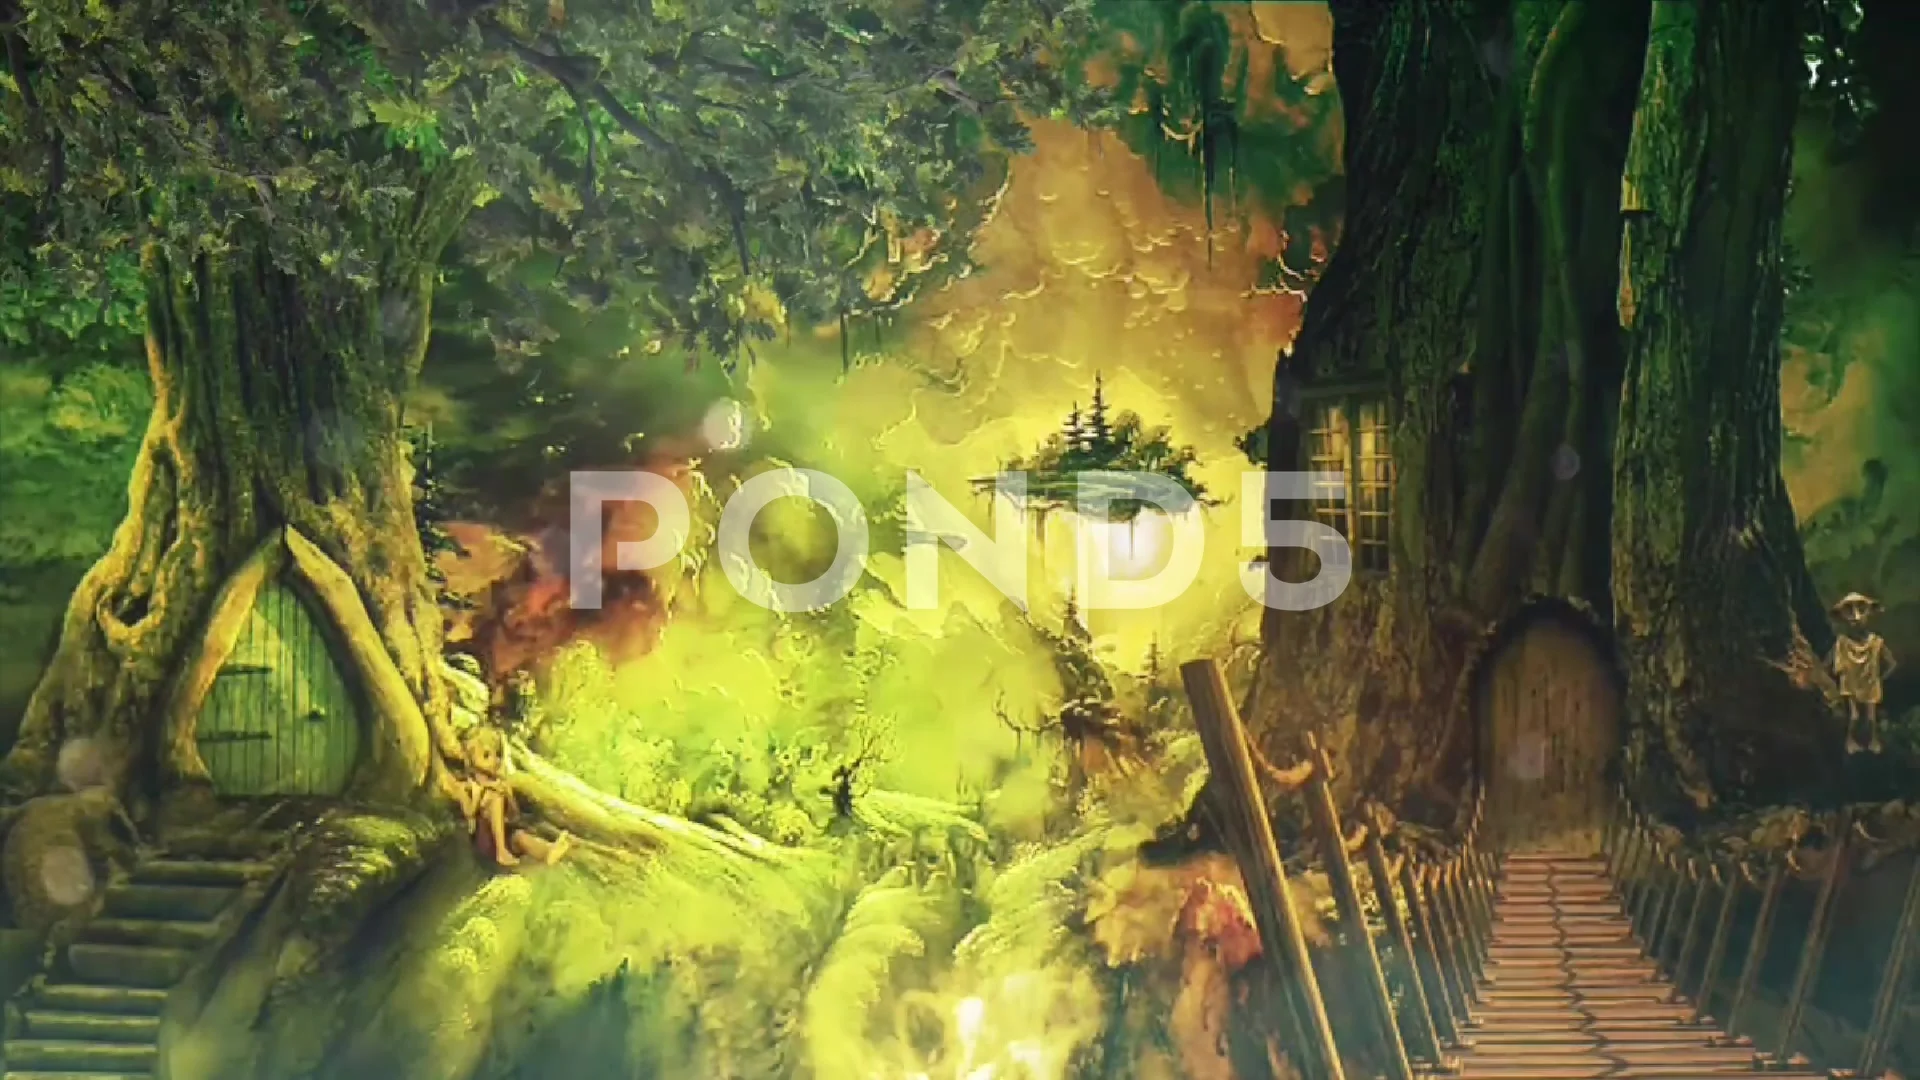 fantasy forest wizard wallpaper